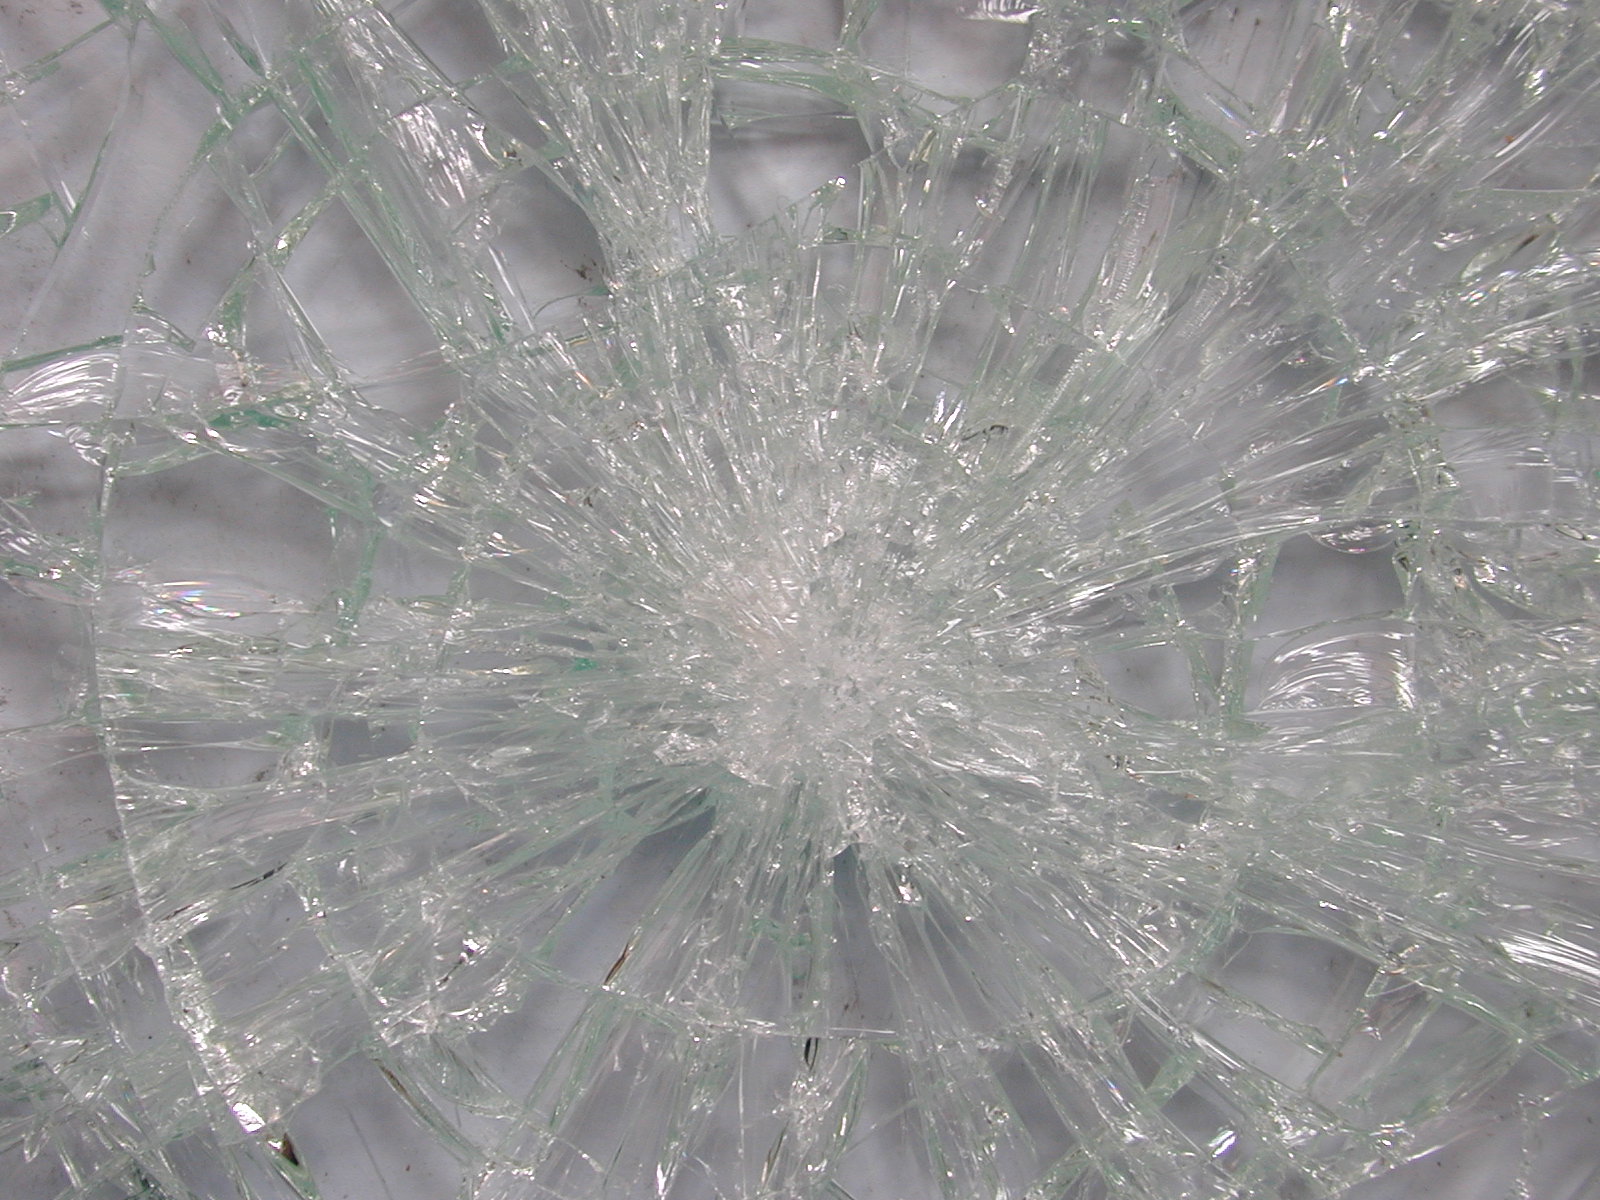 glass star crack windows broken web image